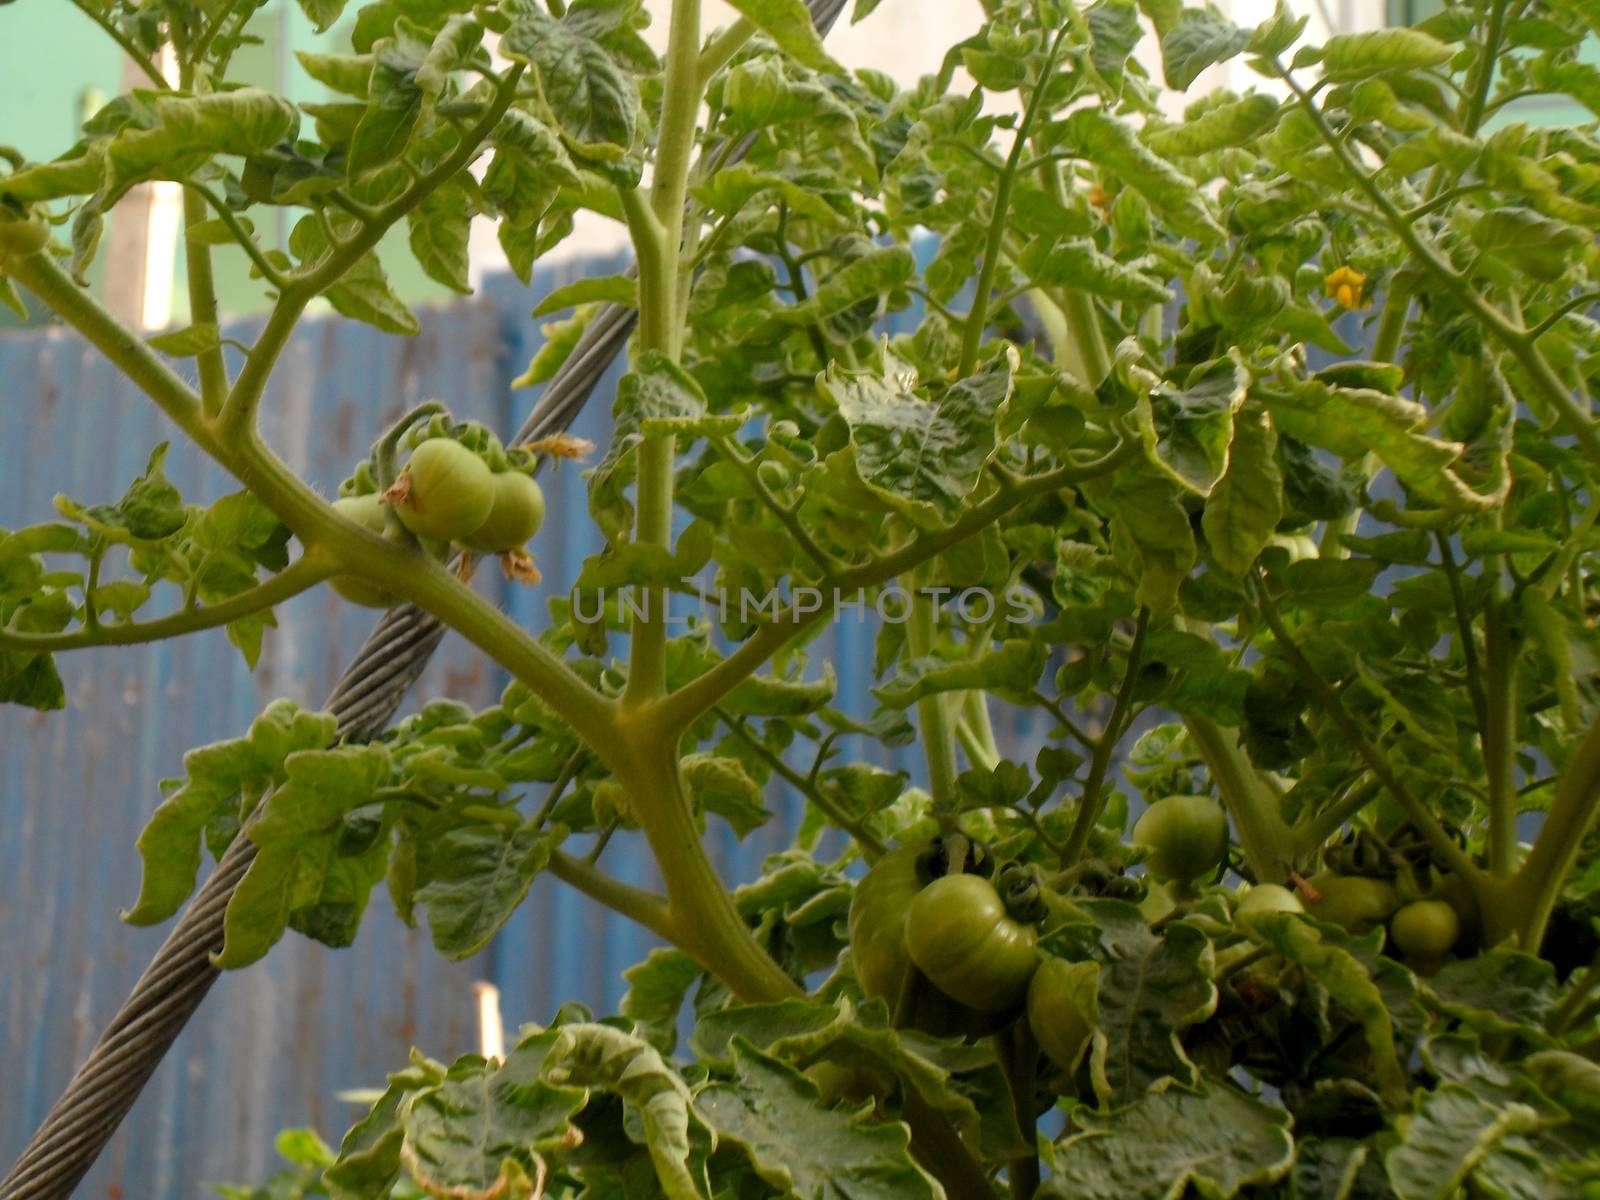 Unripe tomatoes in a garden